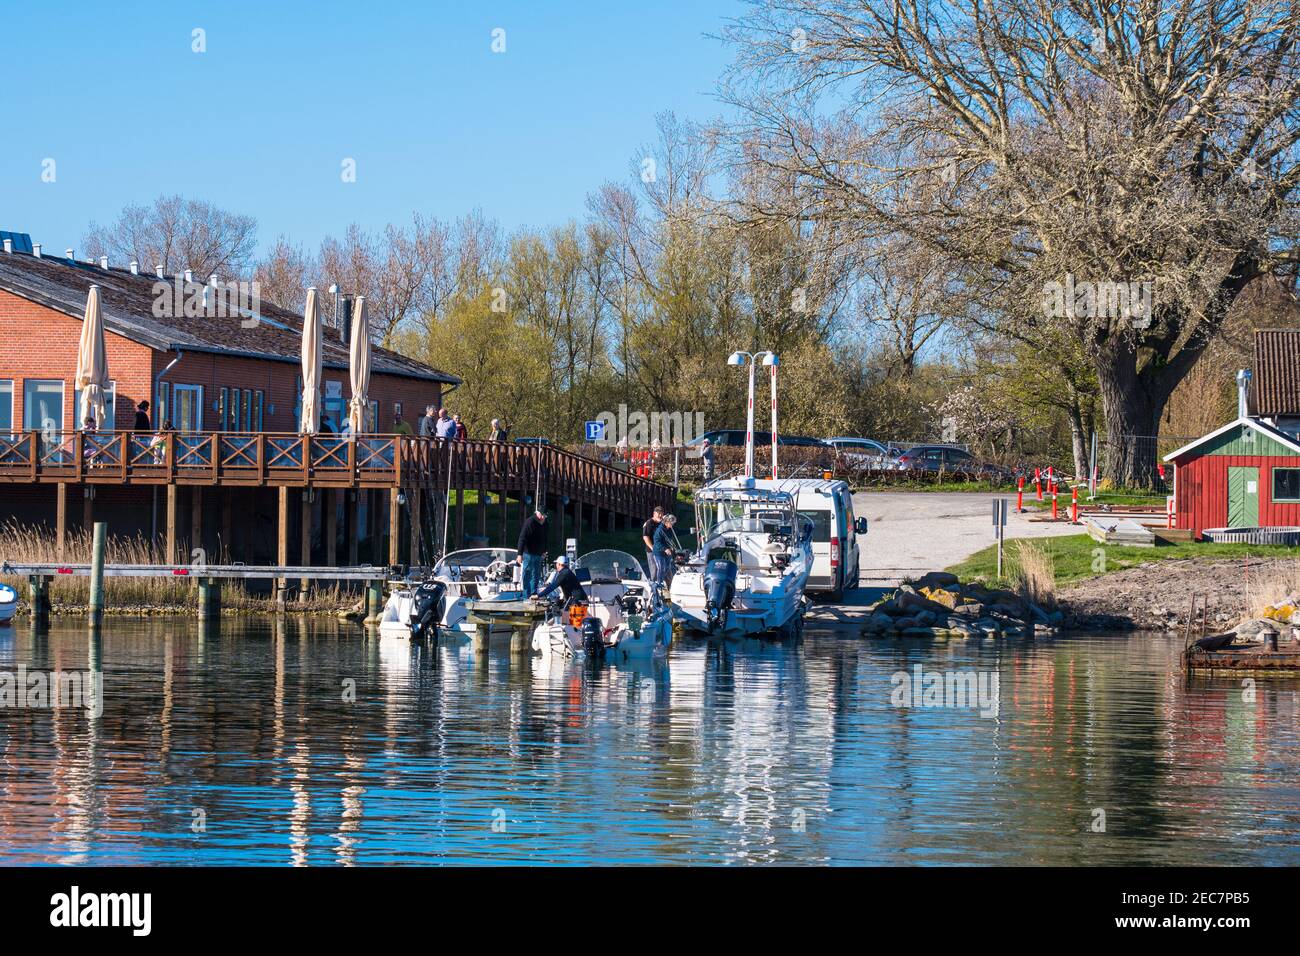 Klintholm Havn, Denmark - May 5. 2018: small leisure fishing boats in Port of Klintholm havn in Denmark Stock Photo